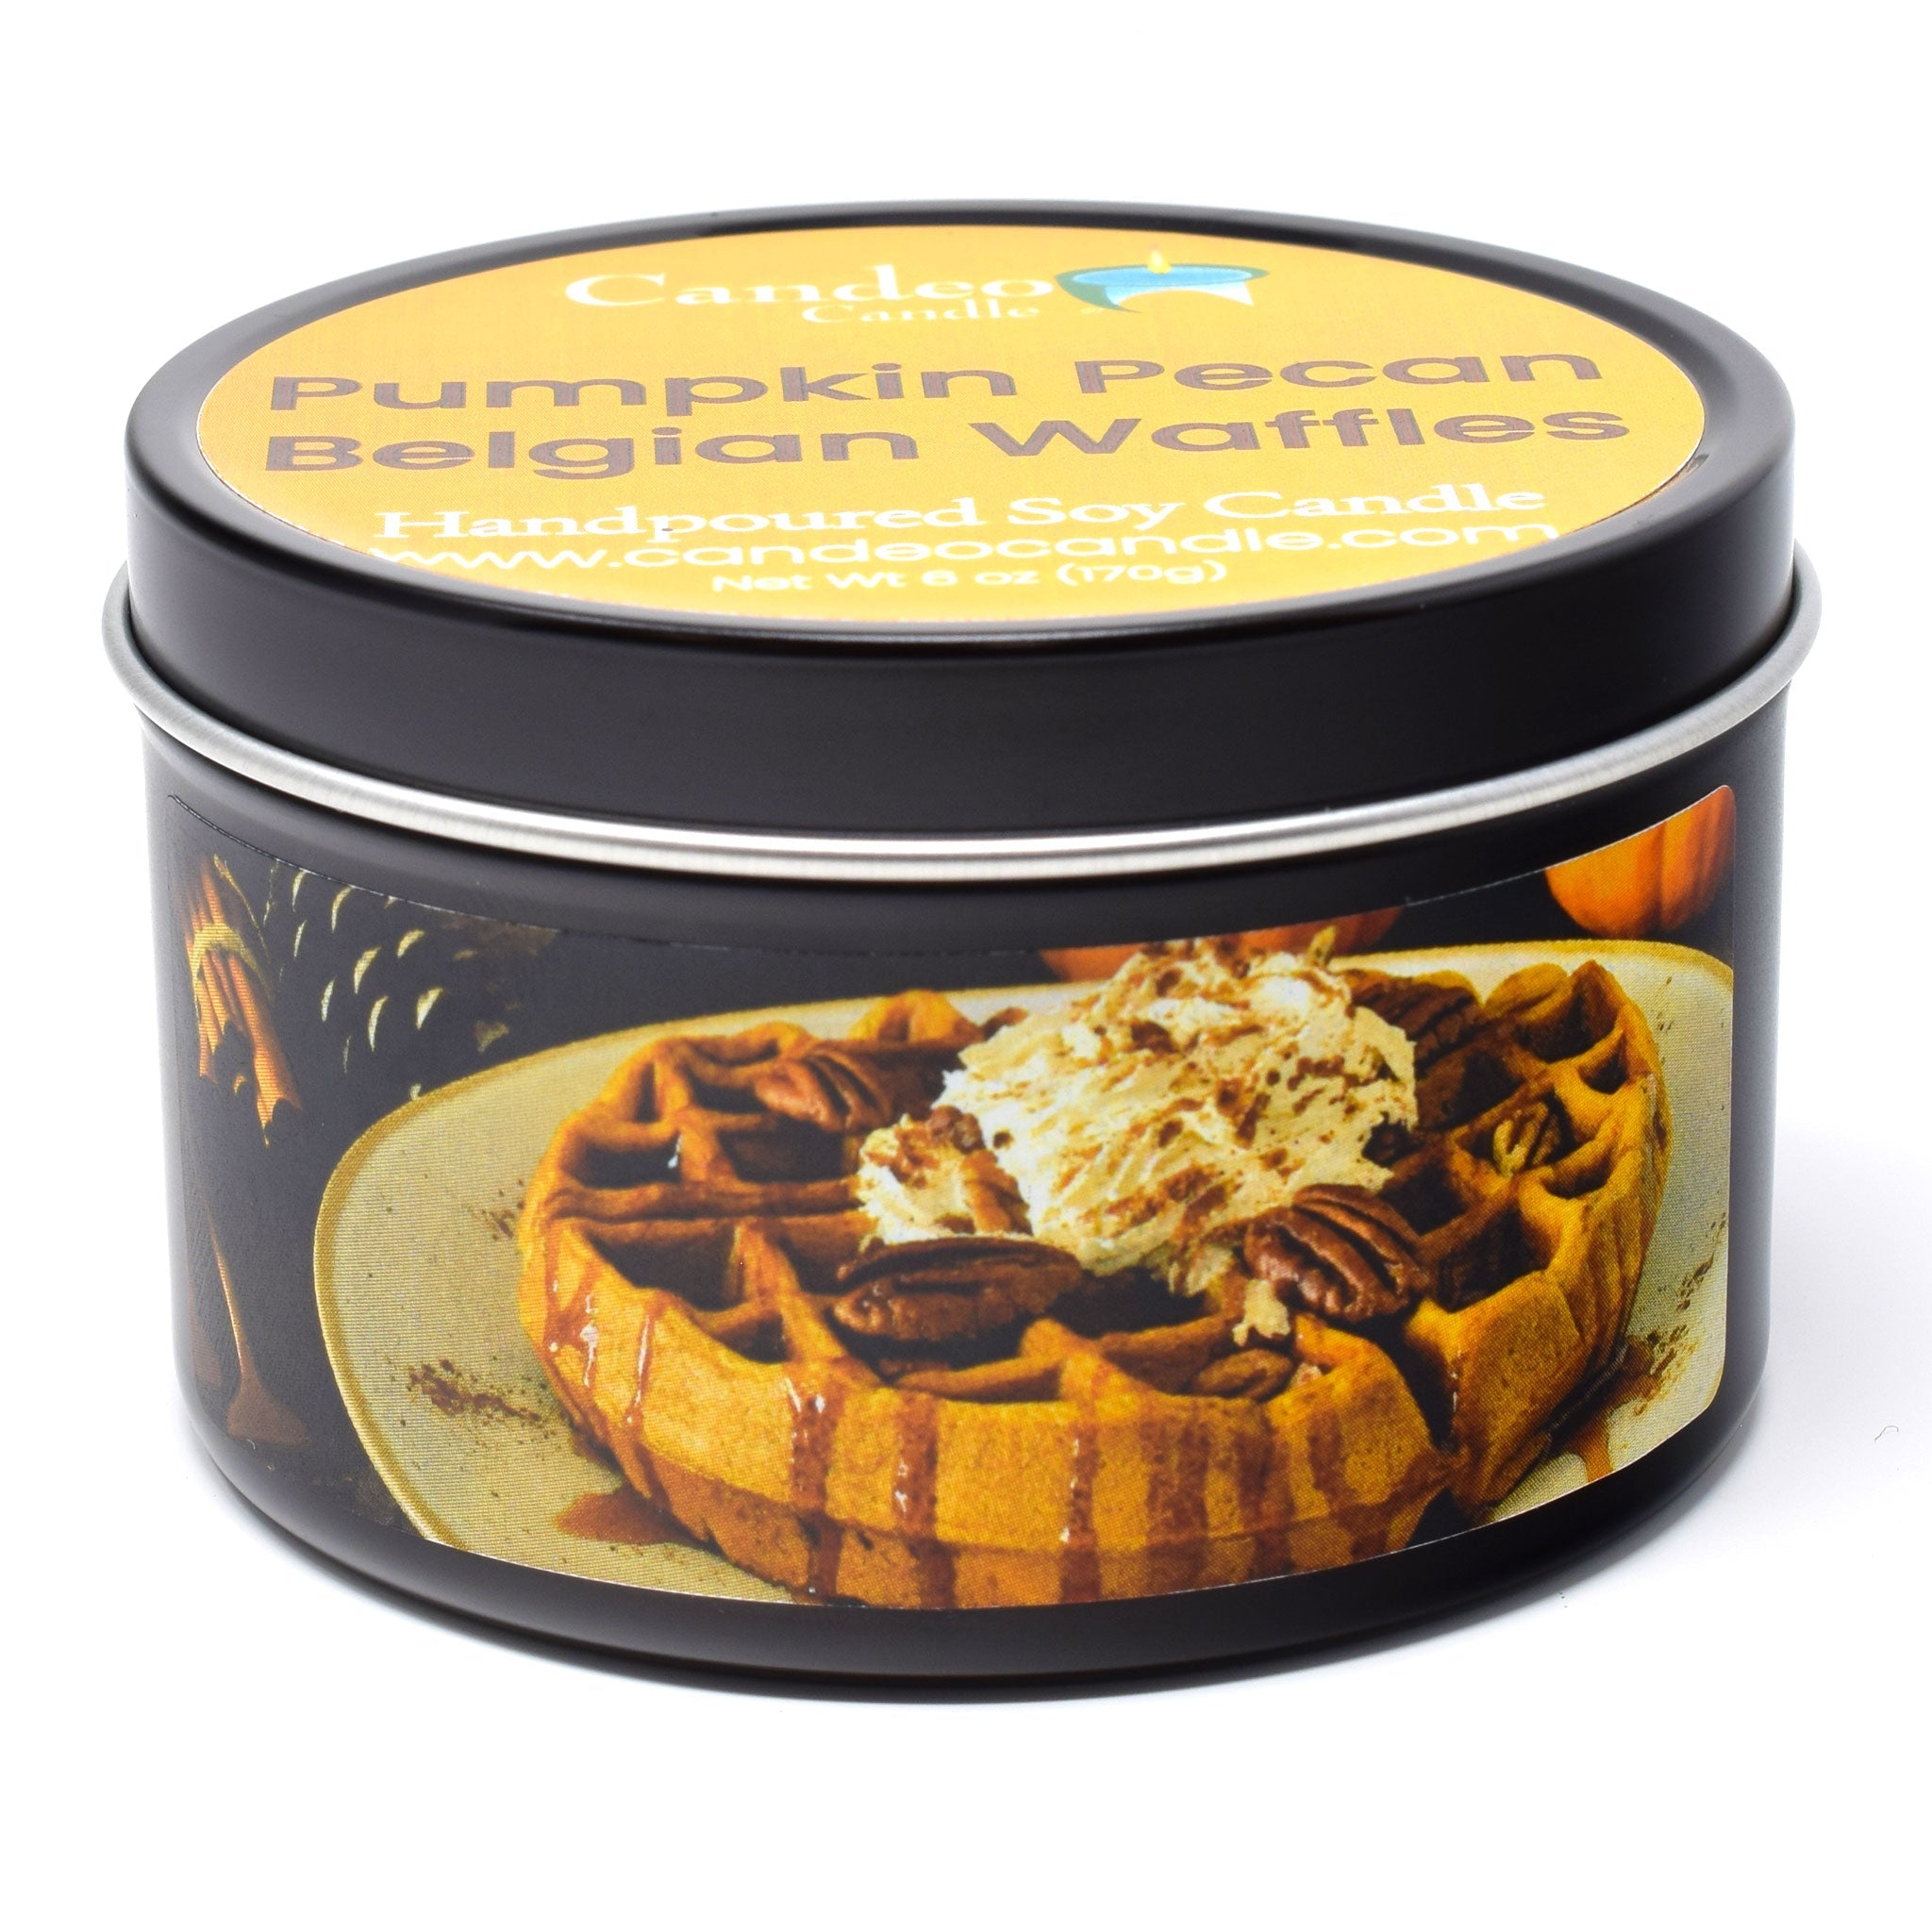 Pumpkin Pecan Belgian Waffles, 6oz Soy Candle Tin - Candeo Candle